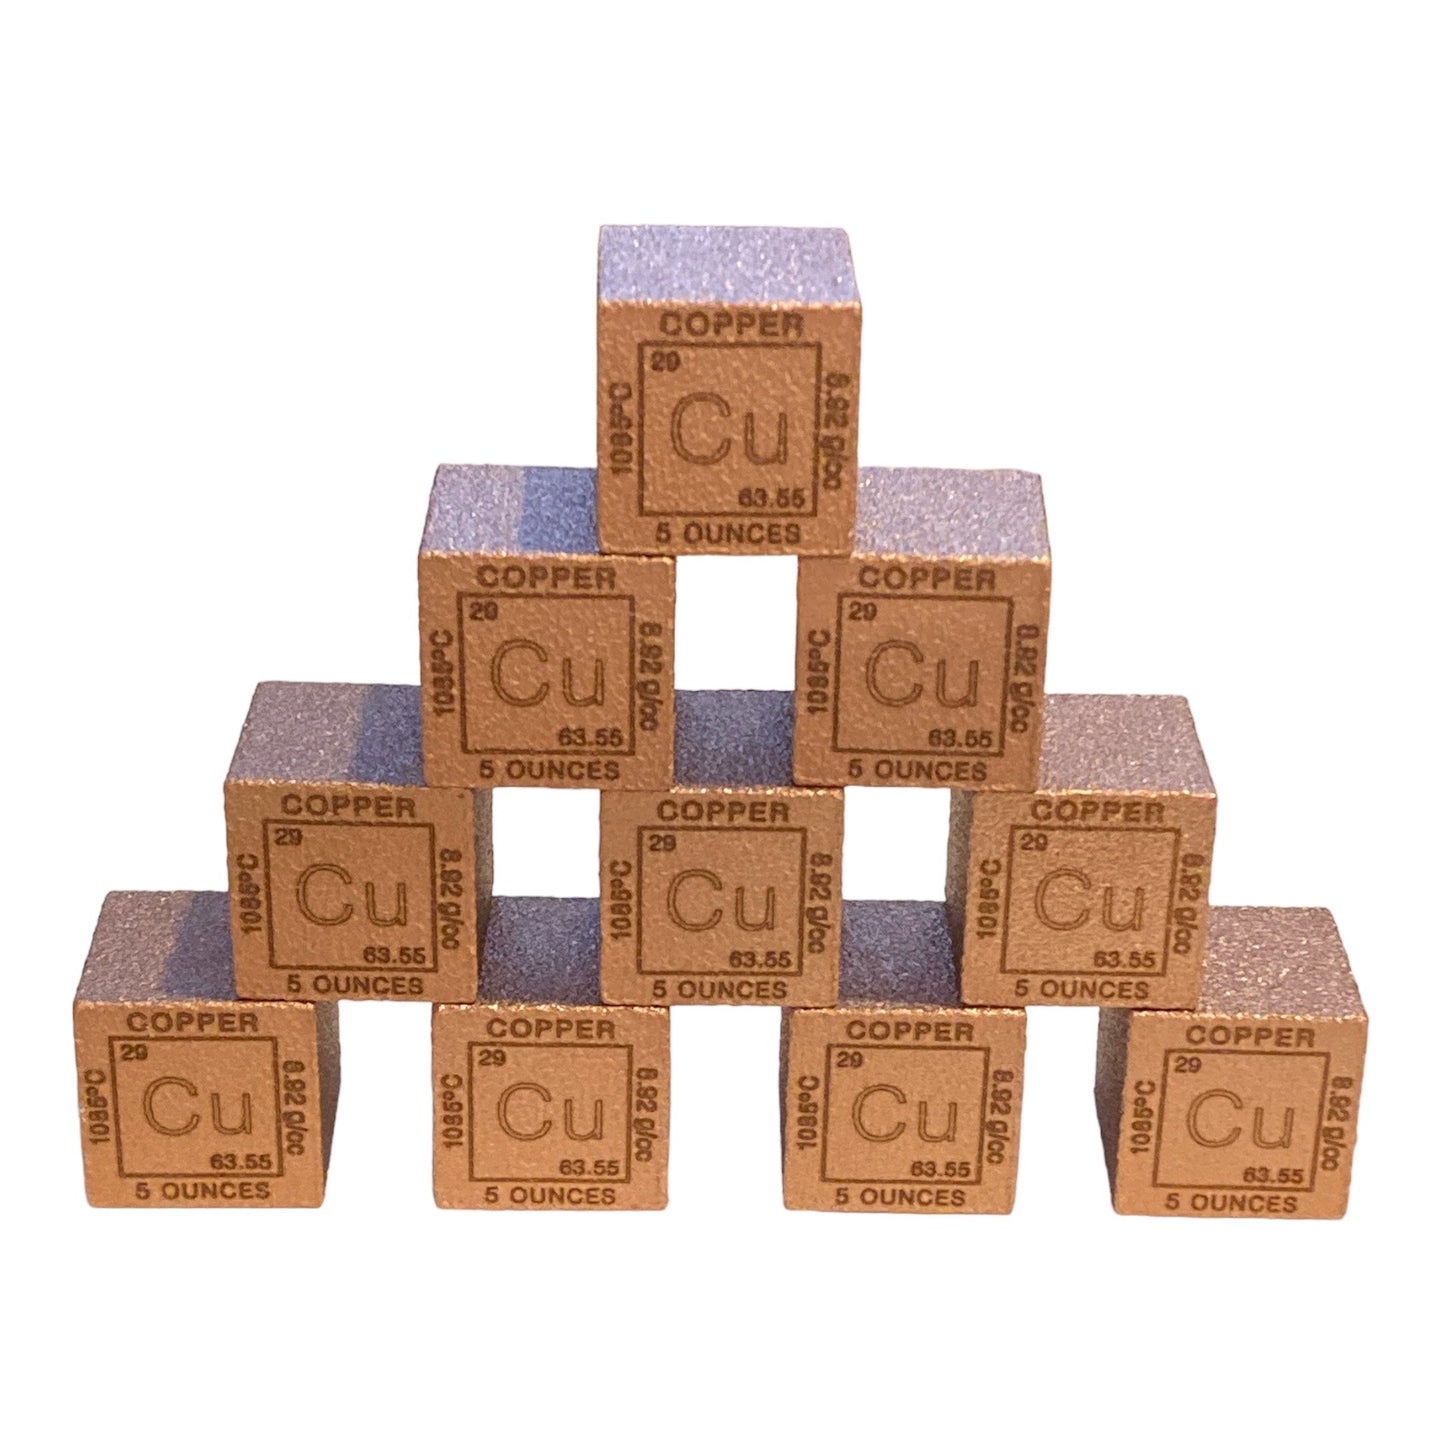 Collectable 5 oz copper Cu Element Cube. Bullion lot of 10